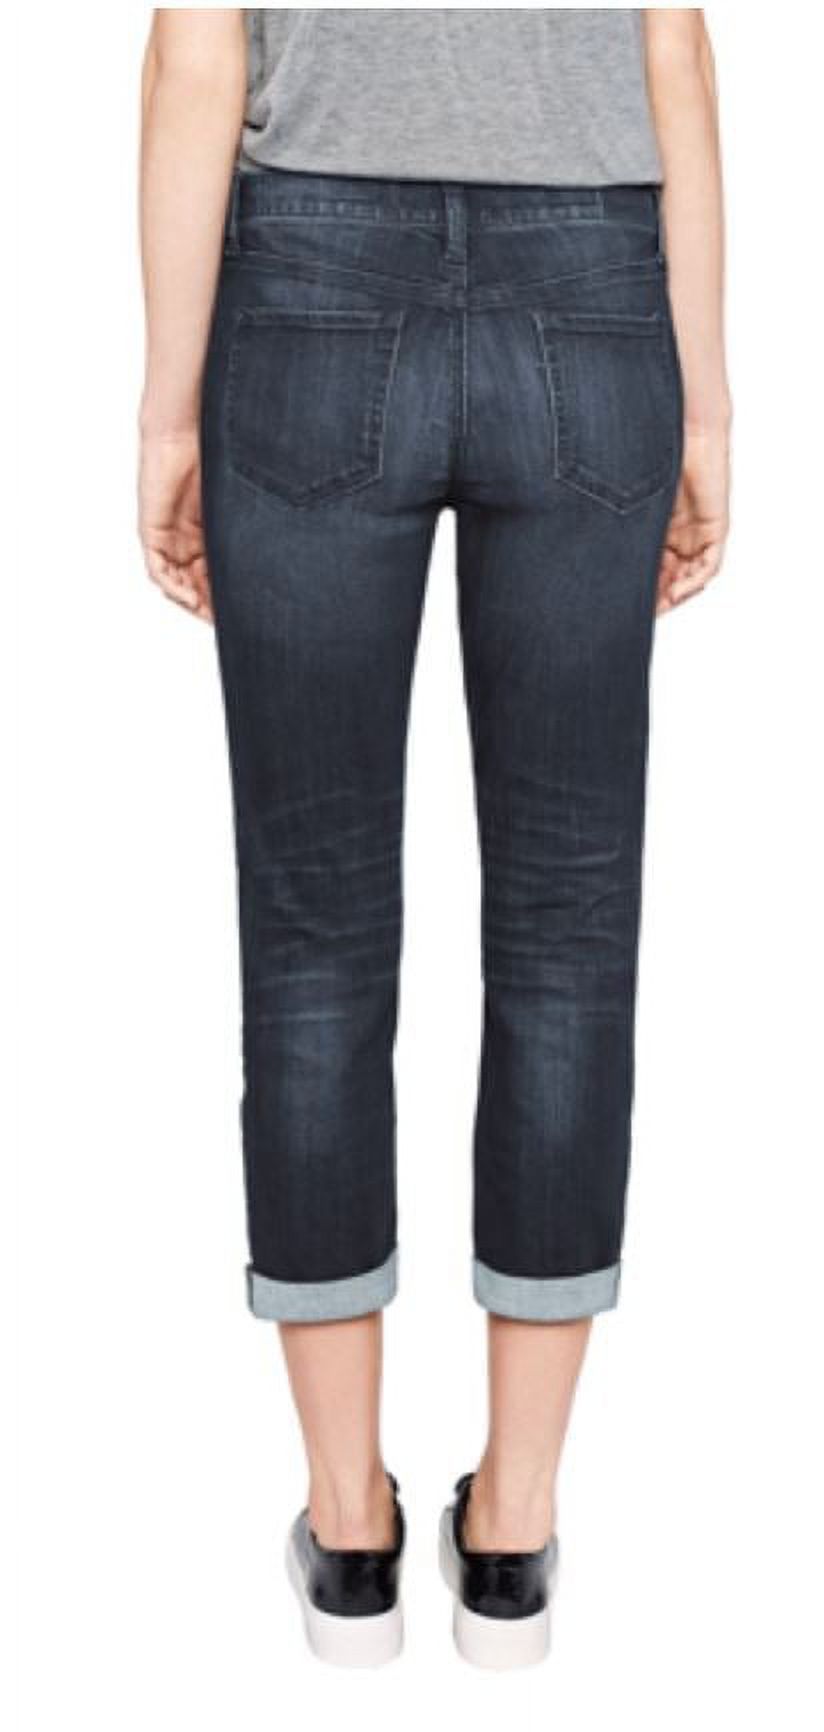 DKNY Womens Mid Rise Soho Skinny Crop Jeans (Dark Wash, 2) - image 3 of 3